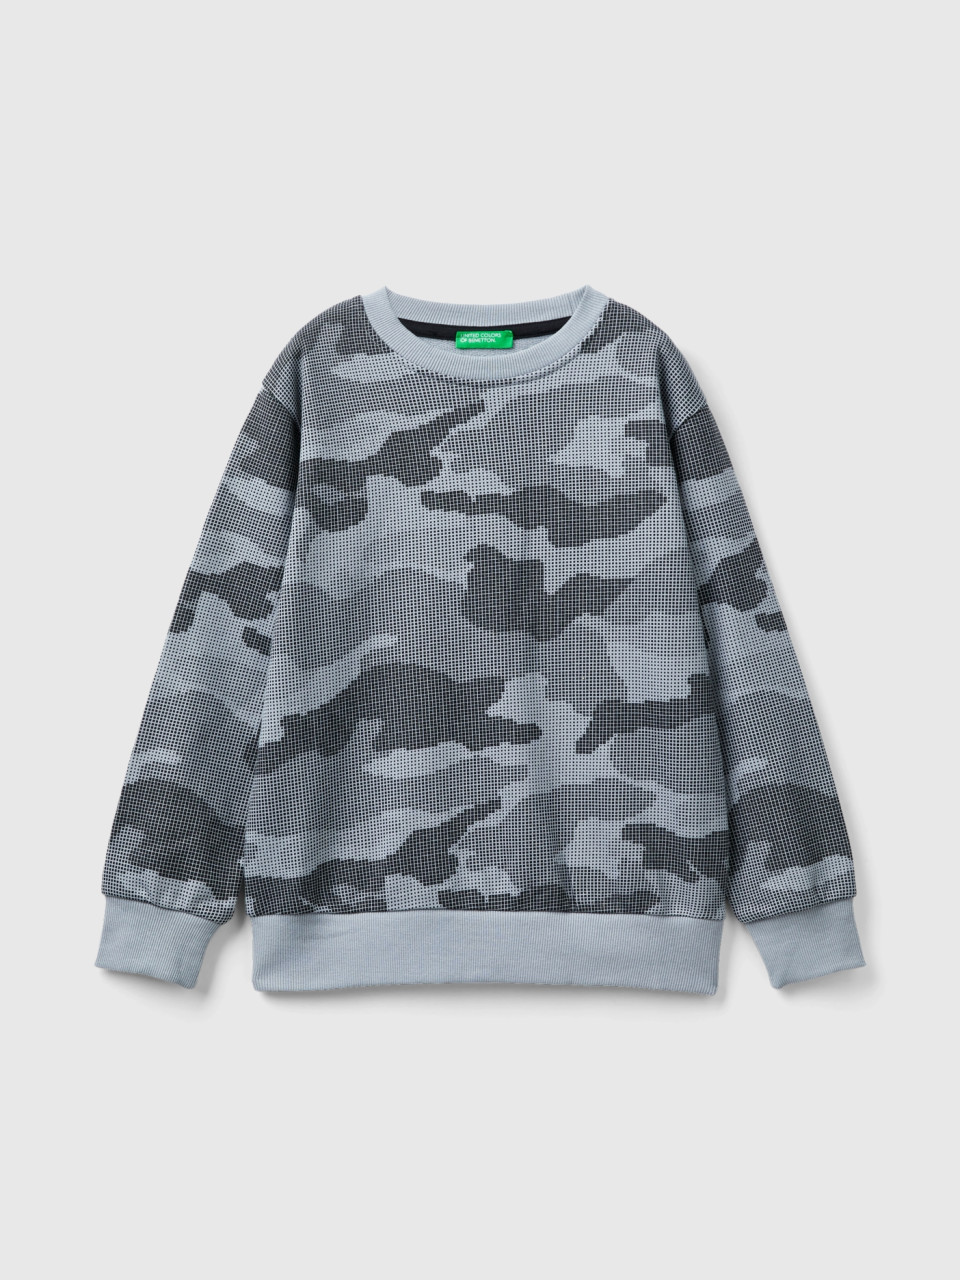 Benetton, Gray Camouflage Sweatshirt, Gray, Kids